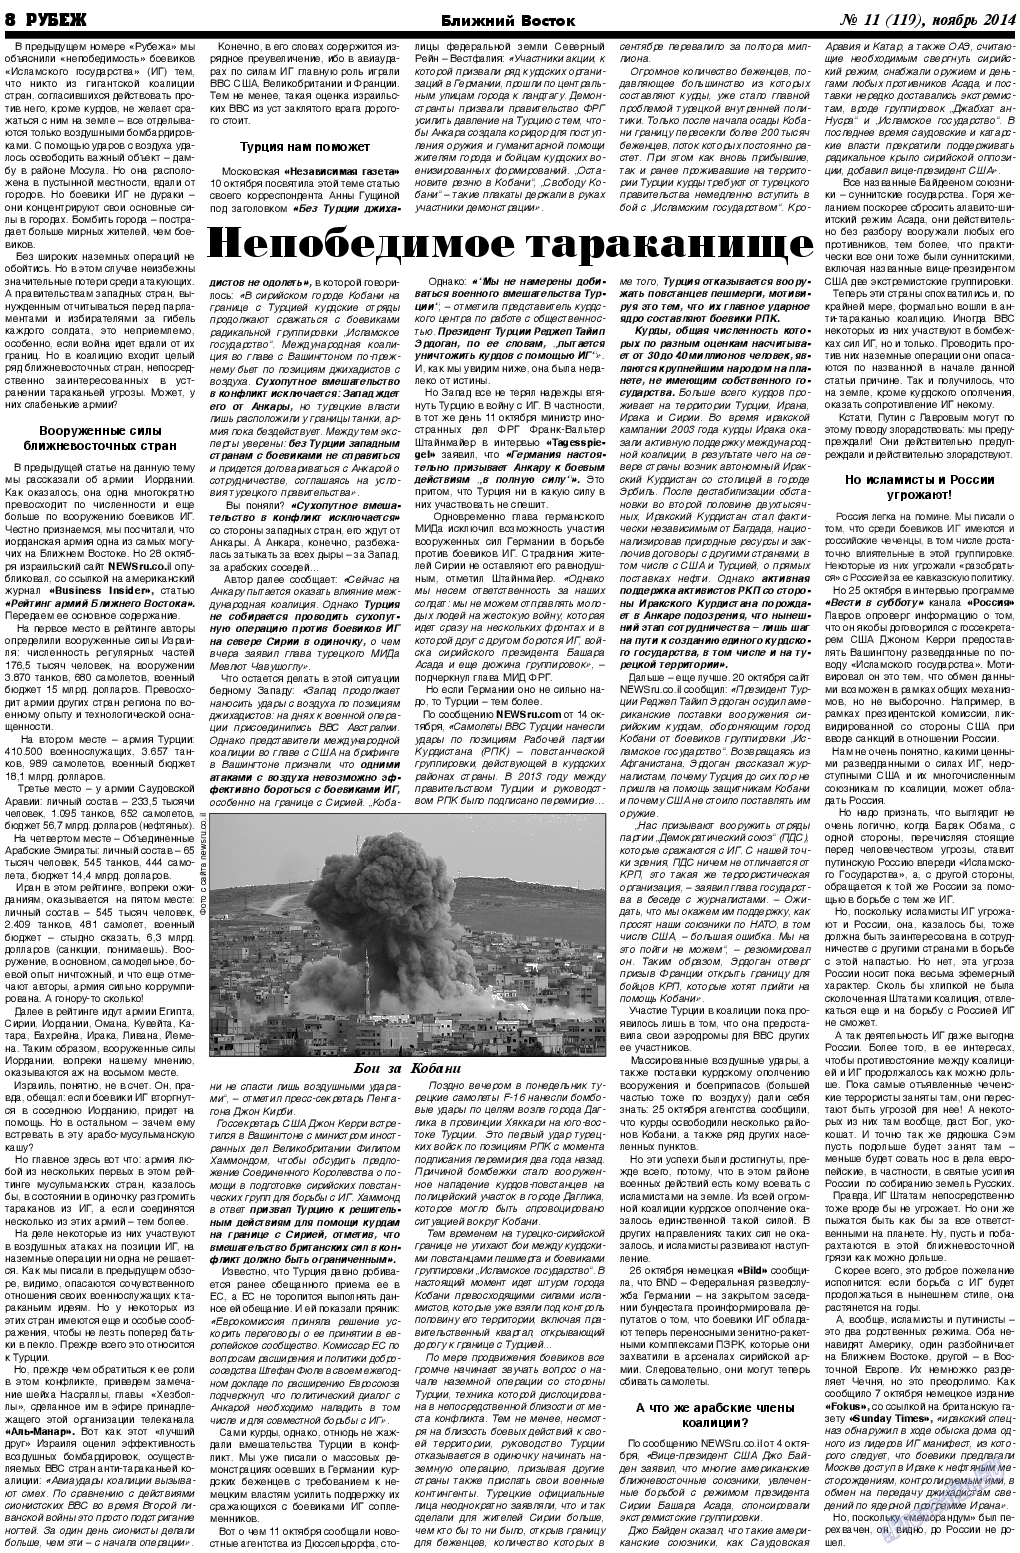 Рубеж, газета. 2014 №11 стр.8